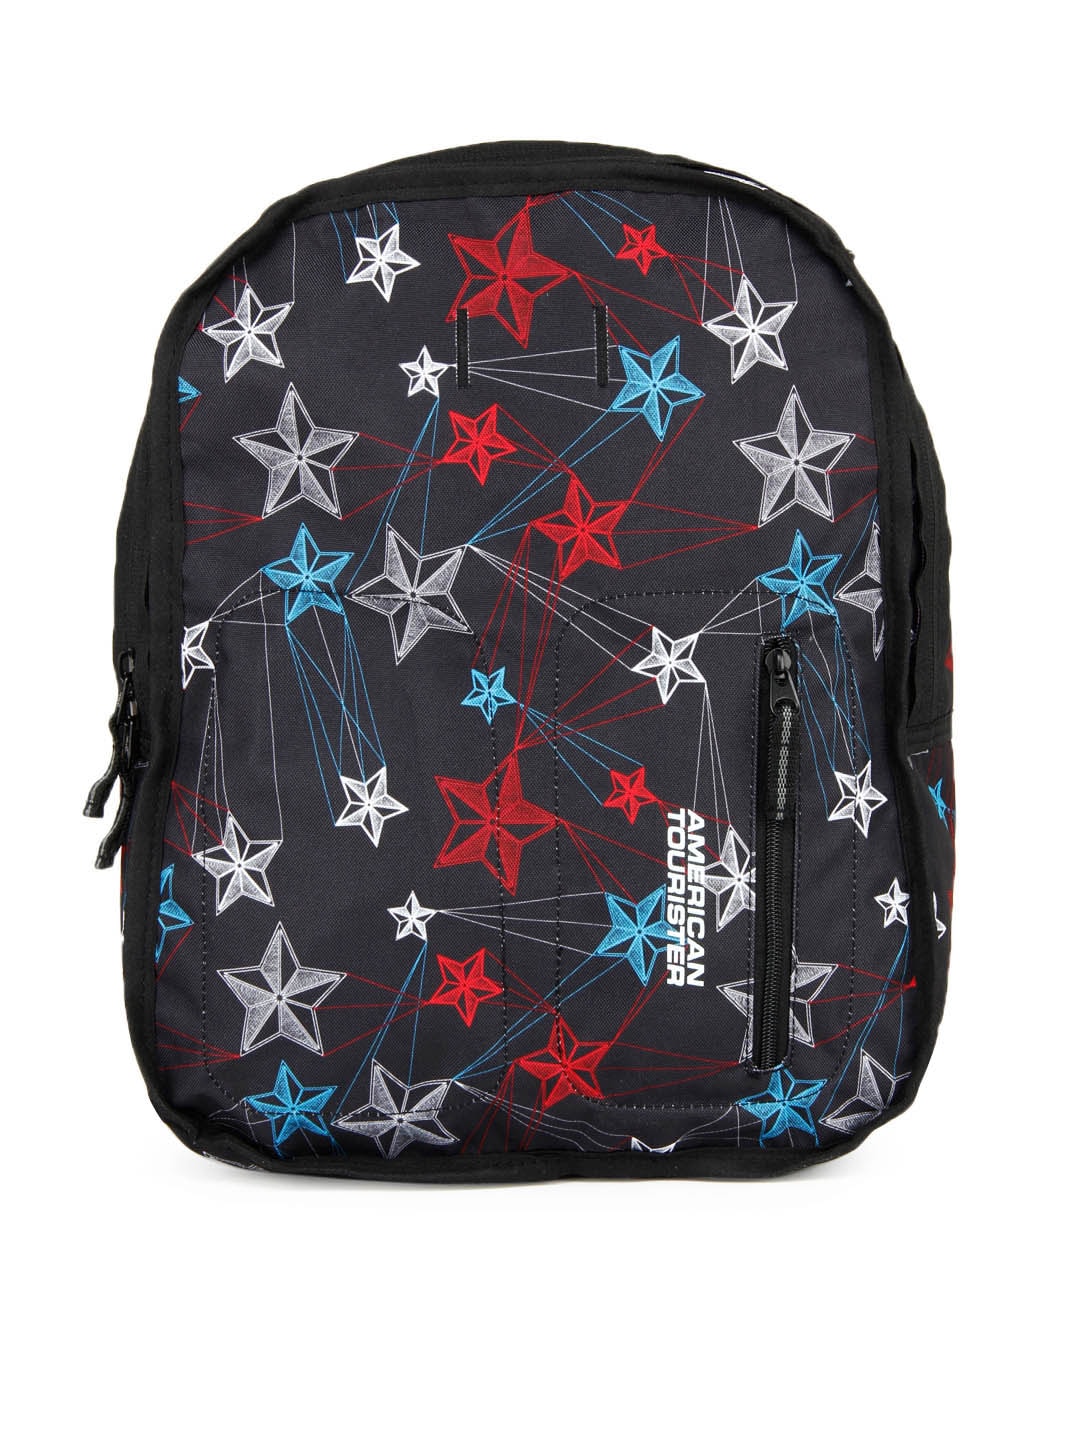 American Tourister Black Reversible Backpack